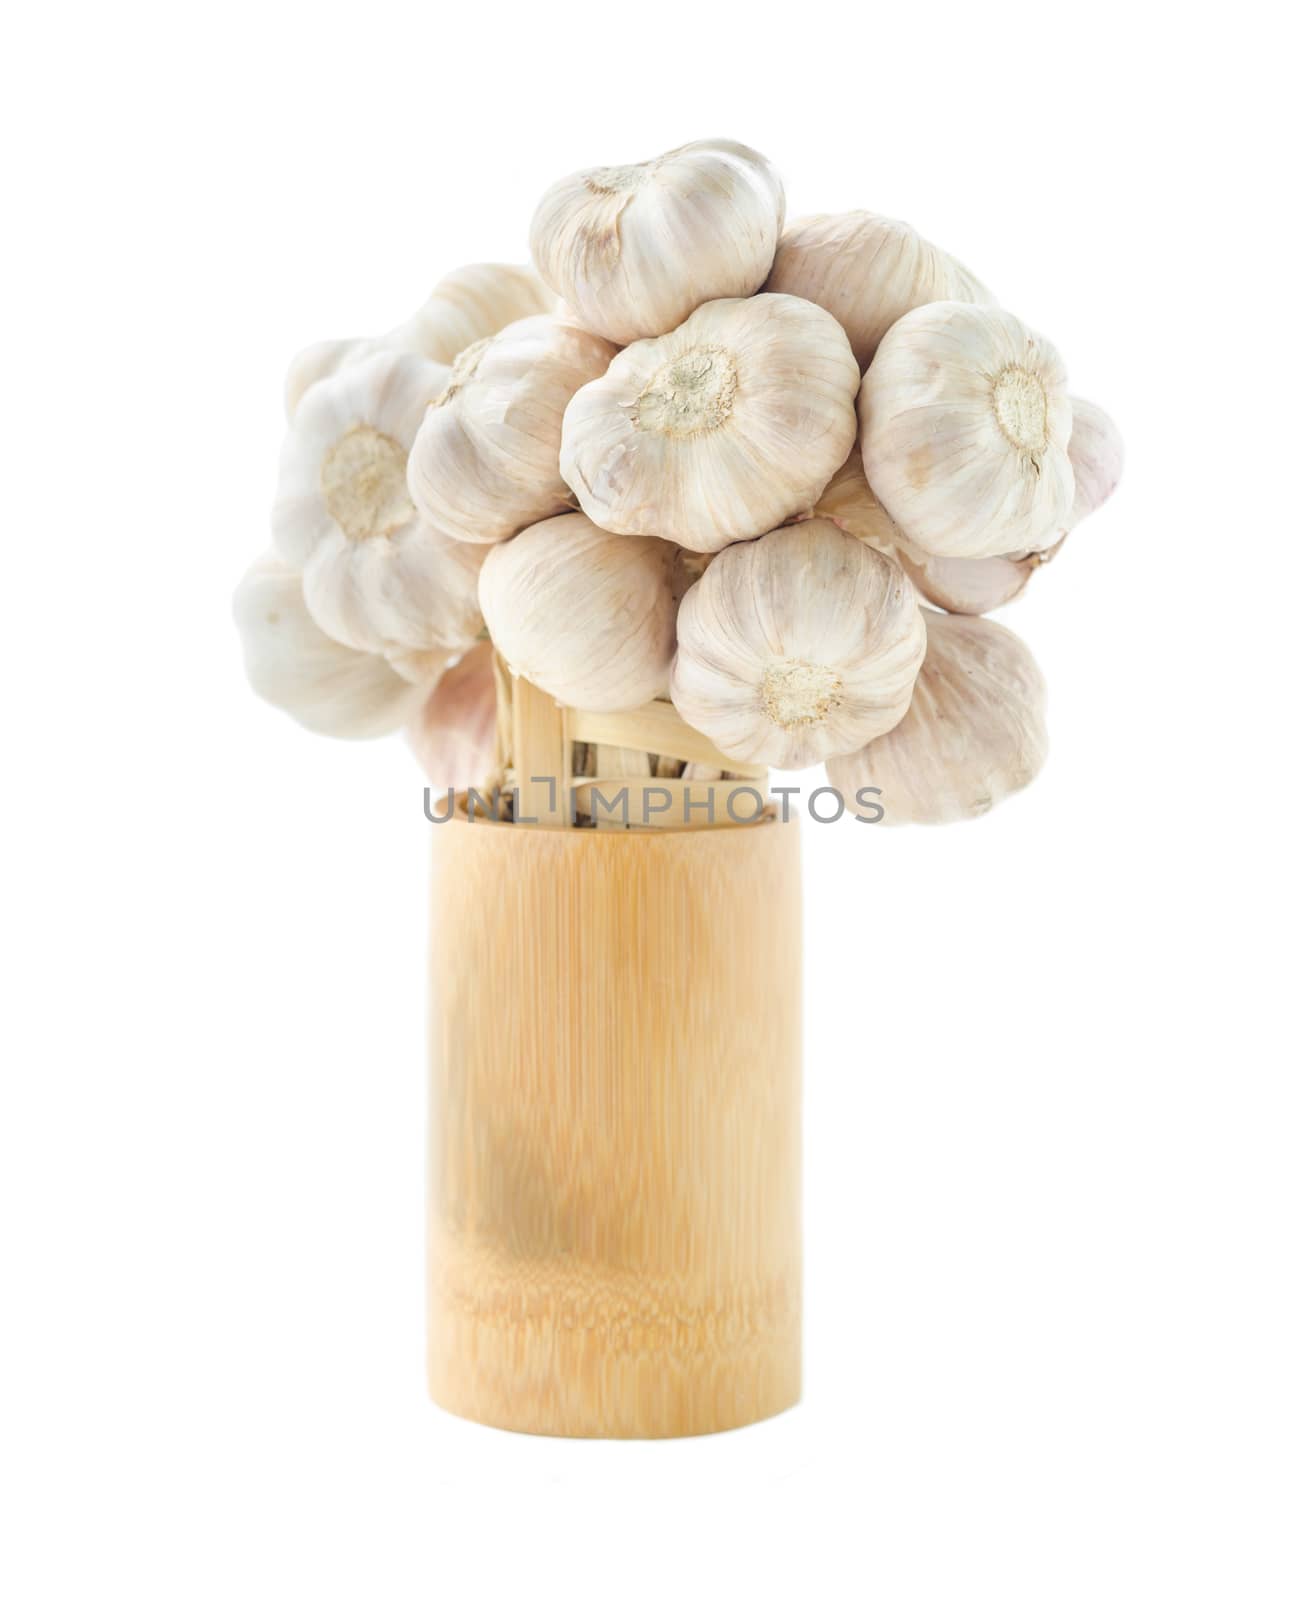 Fresh garlic in wooden cup on white background.